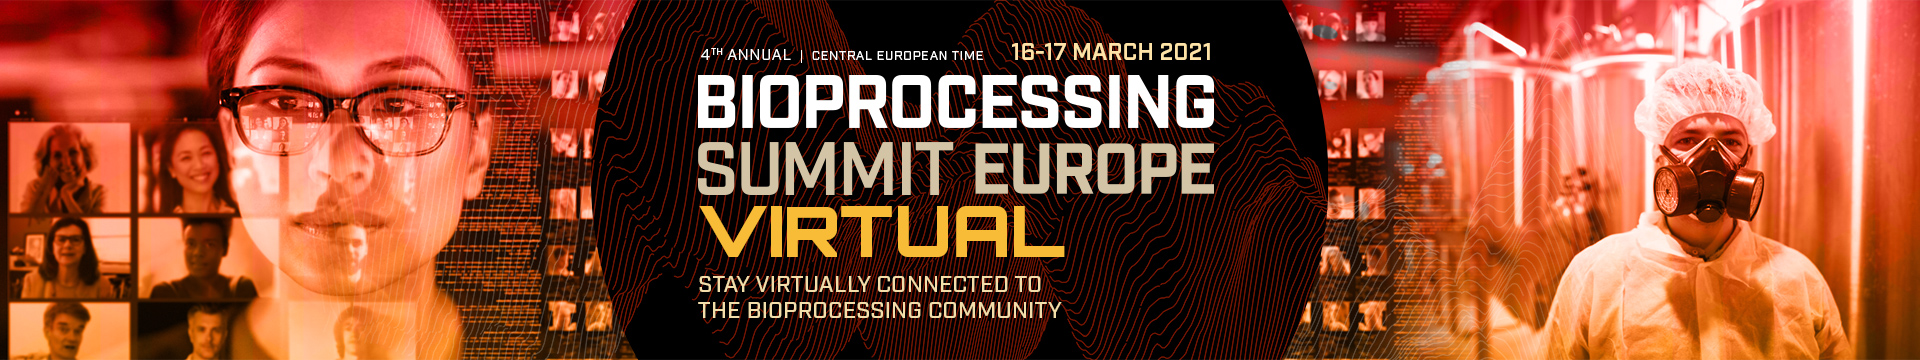 Bioprocessing Summit Europe 2021